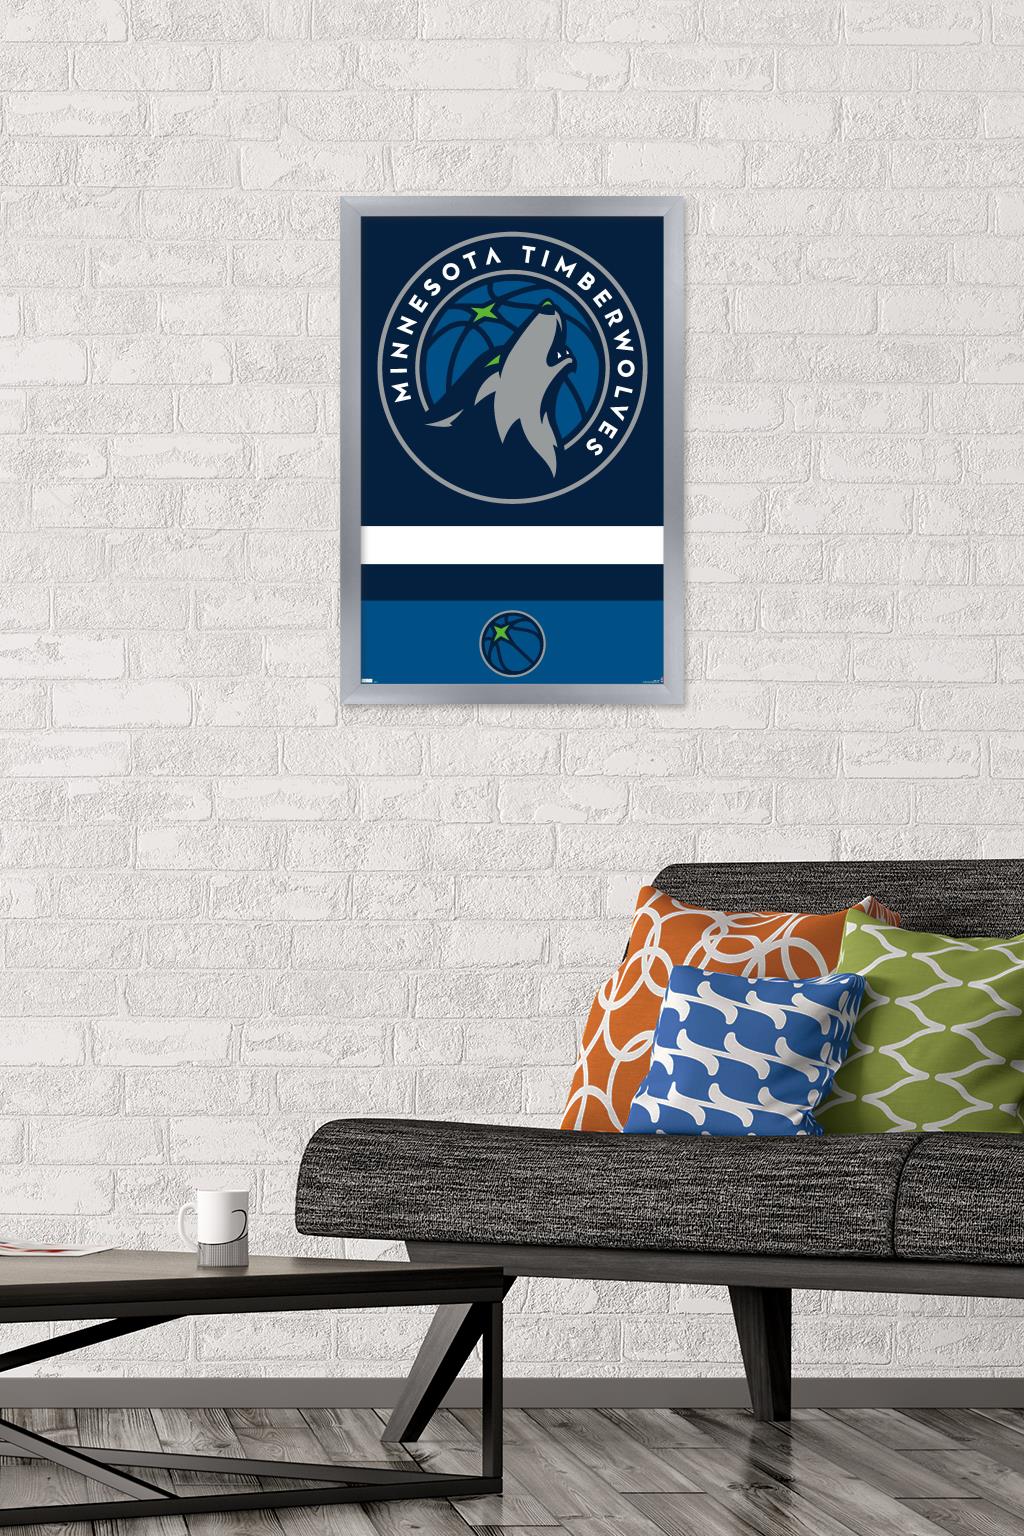 NBA Minnesota Timberwolves - Logo 20 Wall Poster, 14.725" x 22.375", Framed - image 2 of 5